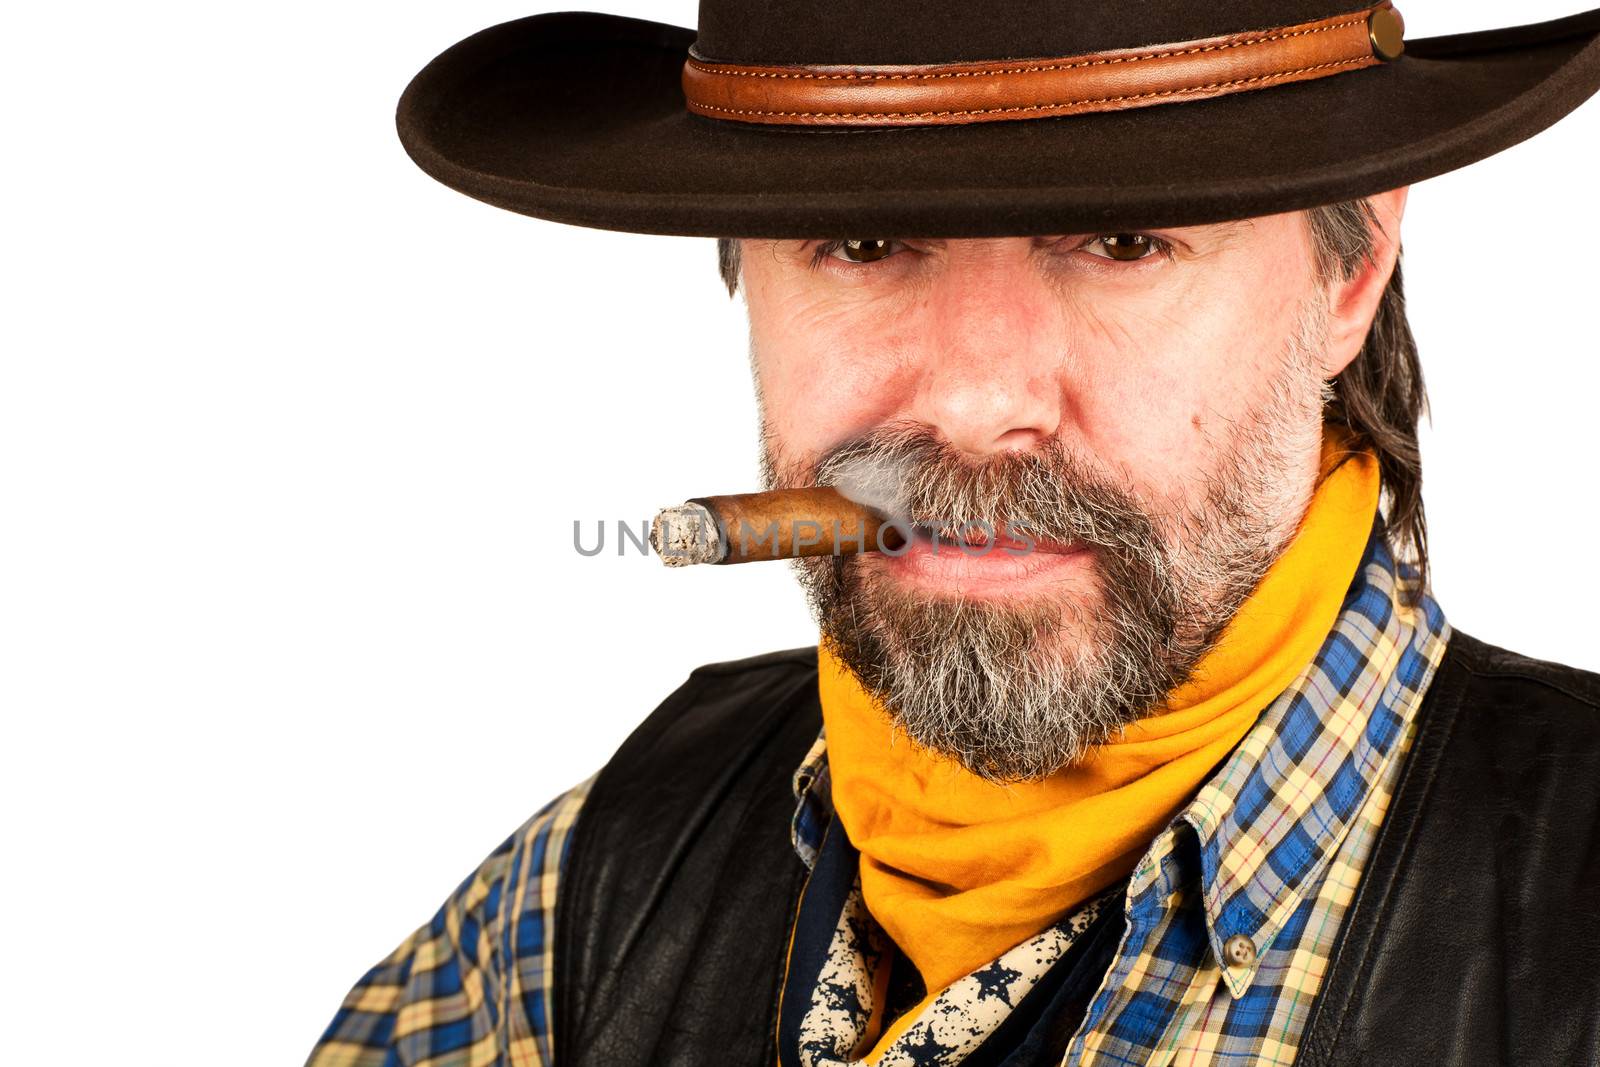 american cowboy, smoking cigar on white background